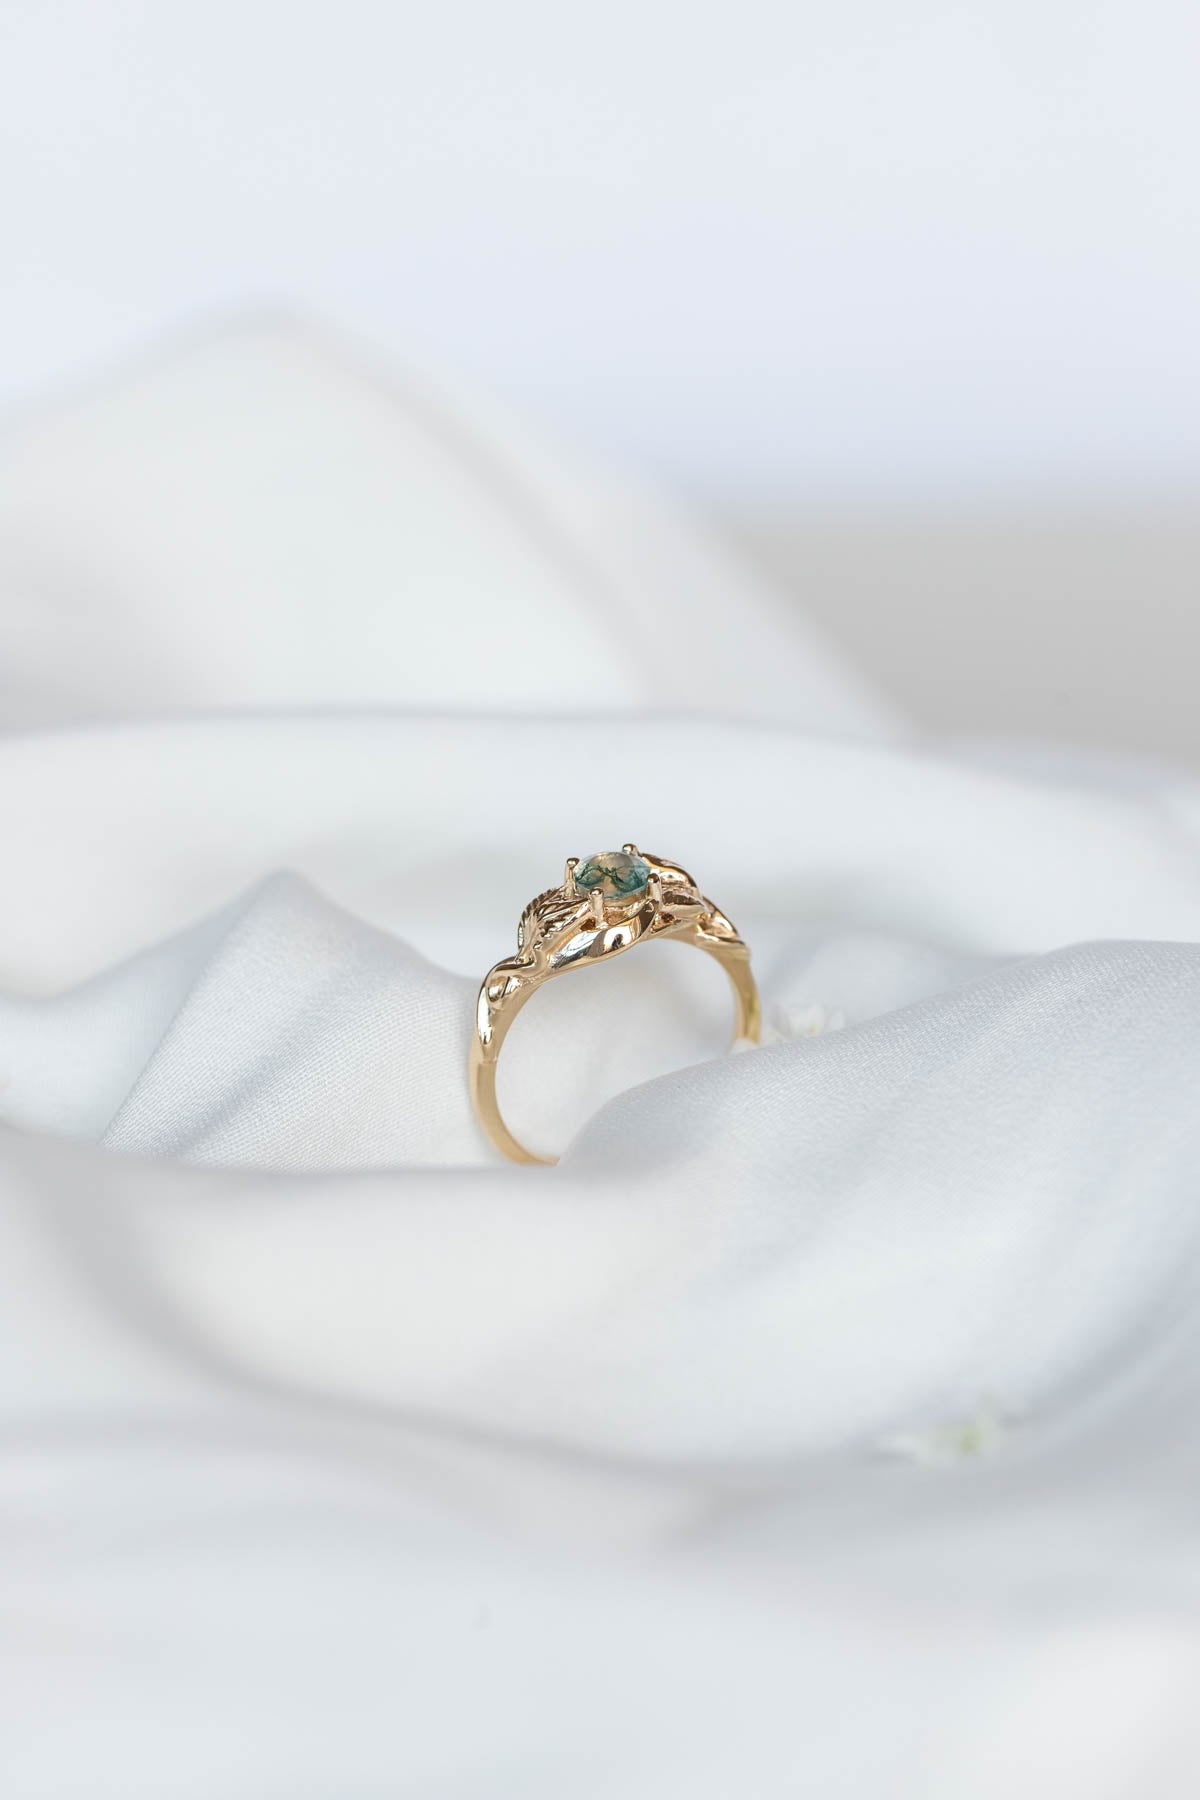 Delicate engagement ring with unique moss agate / Azalea - Eden Garden Jewelry™